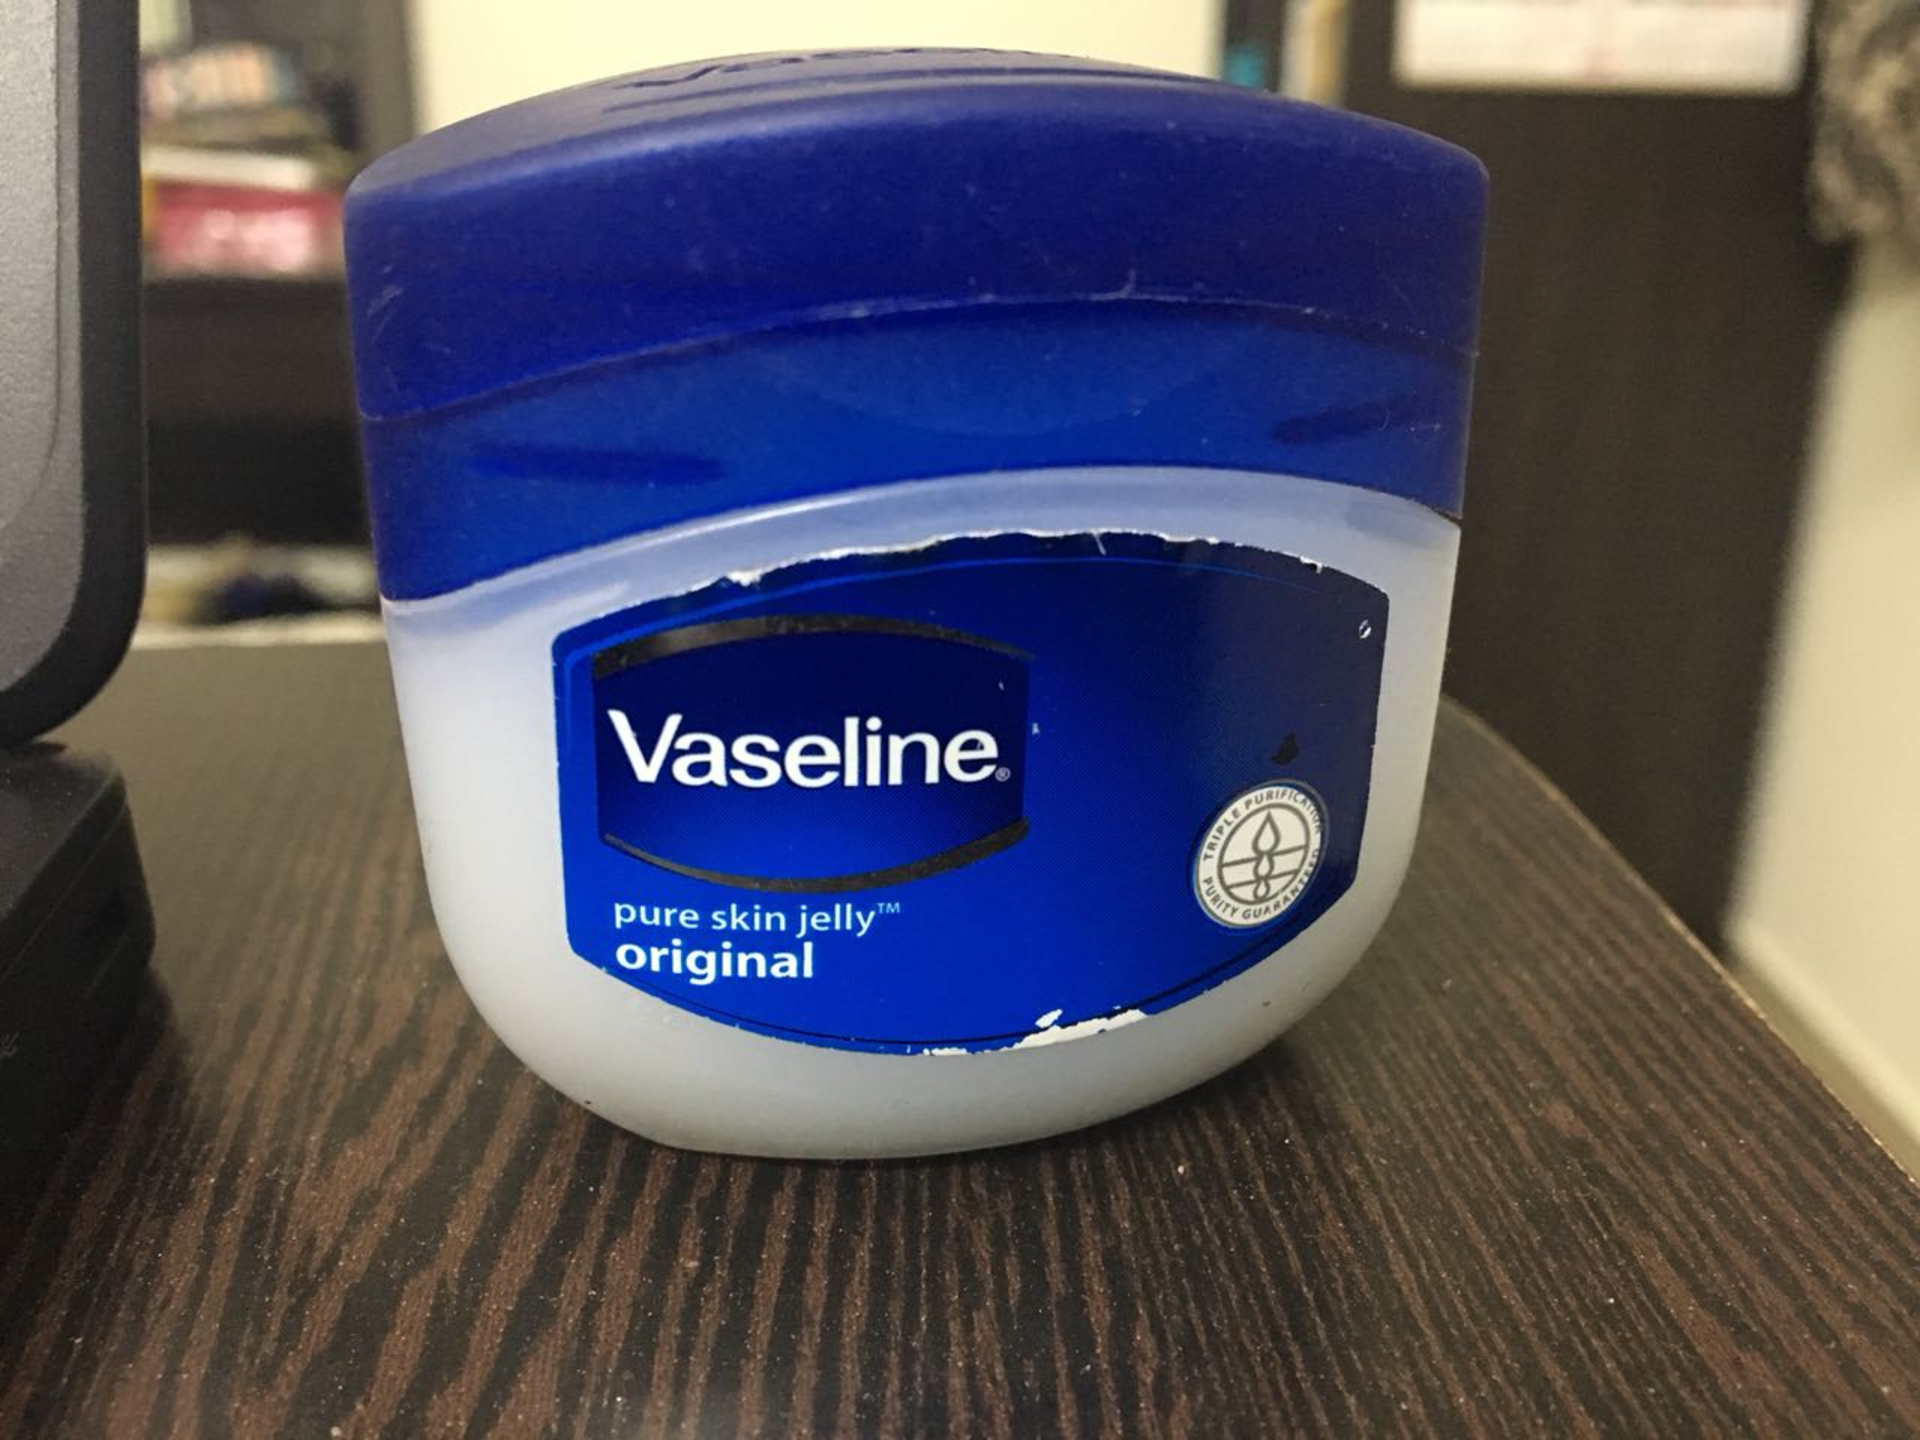  8 Ways You can Use Vaseline  image